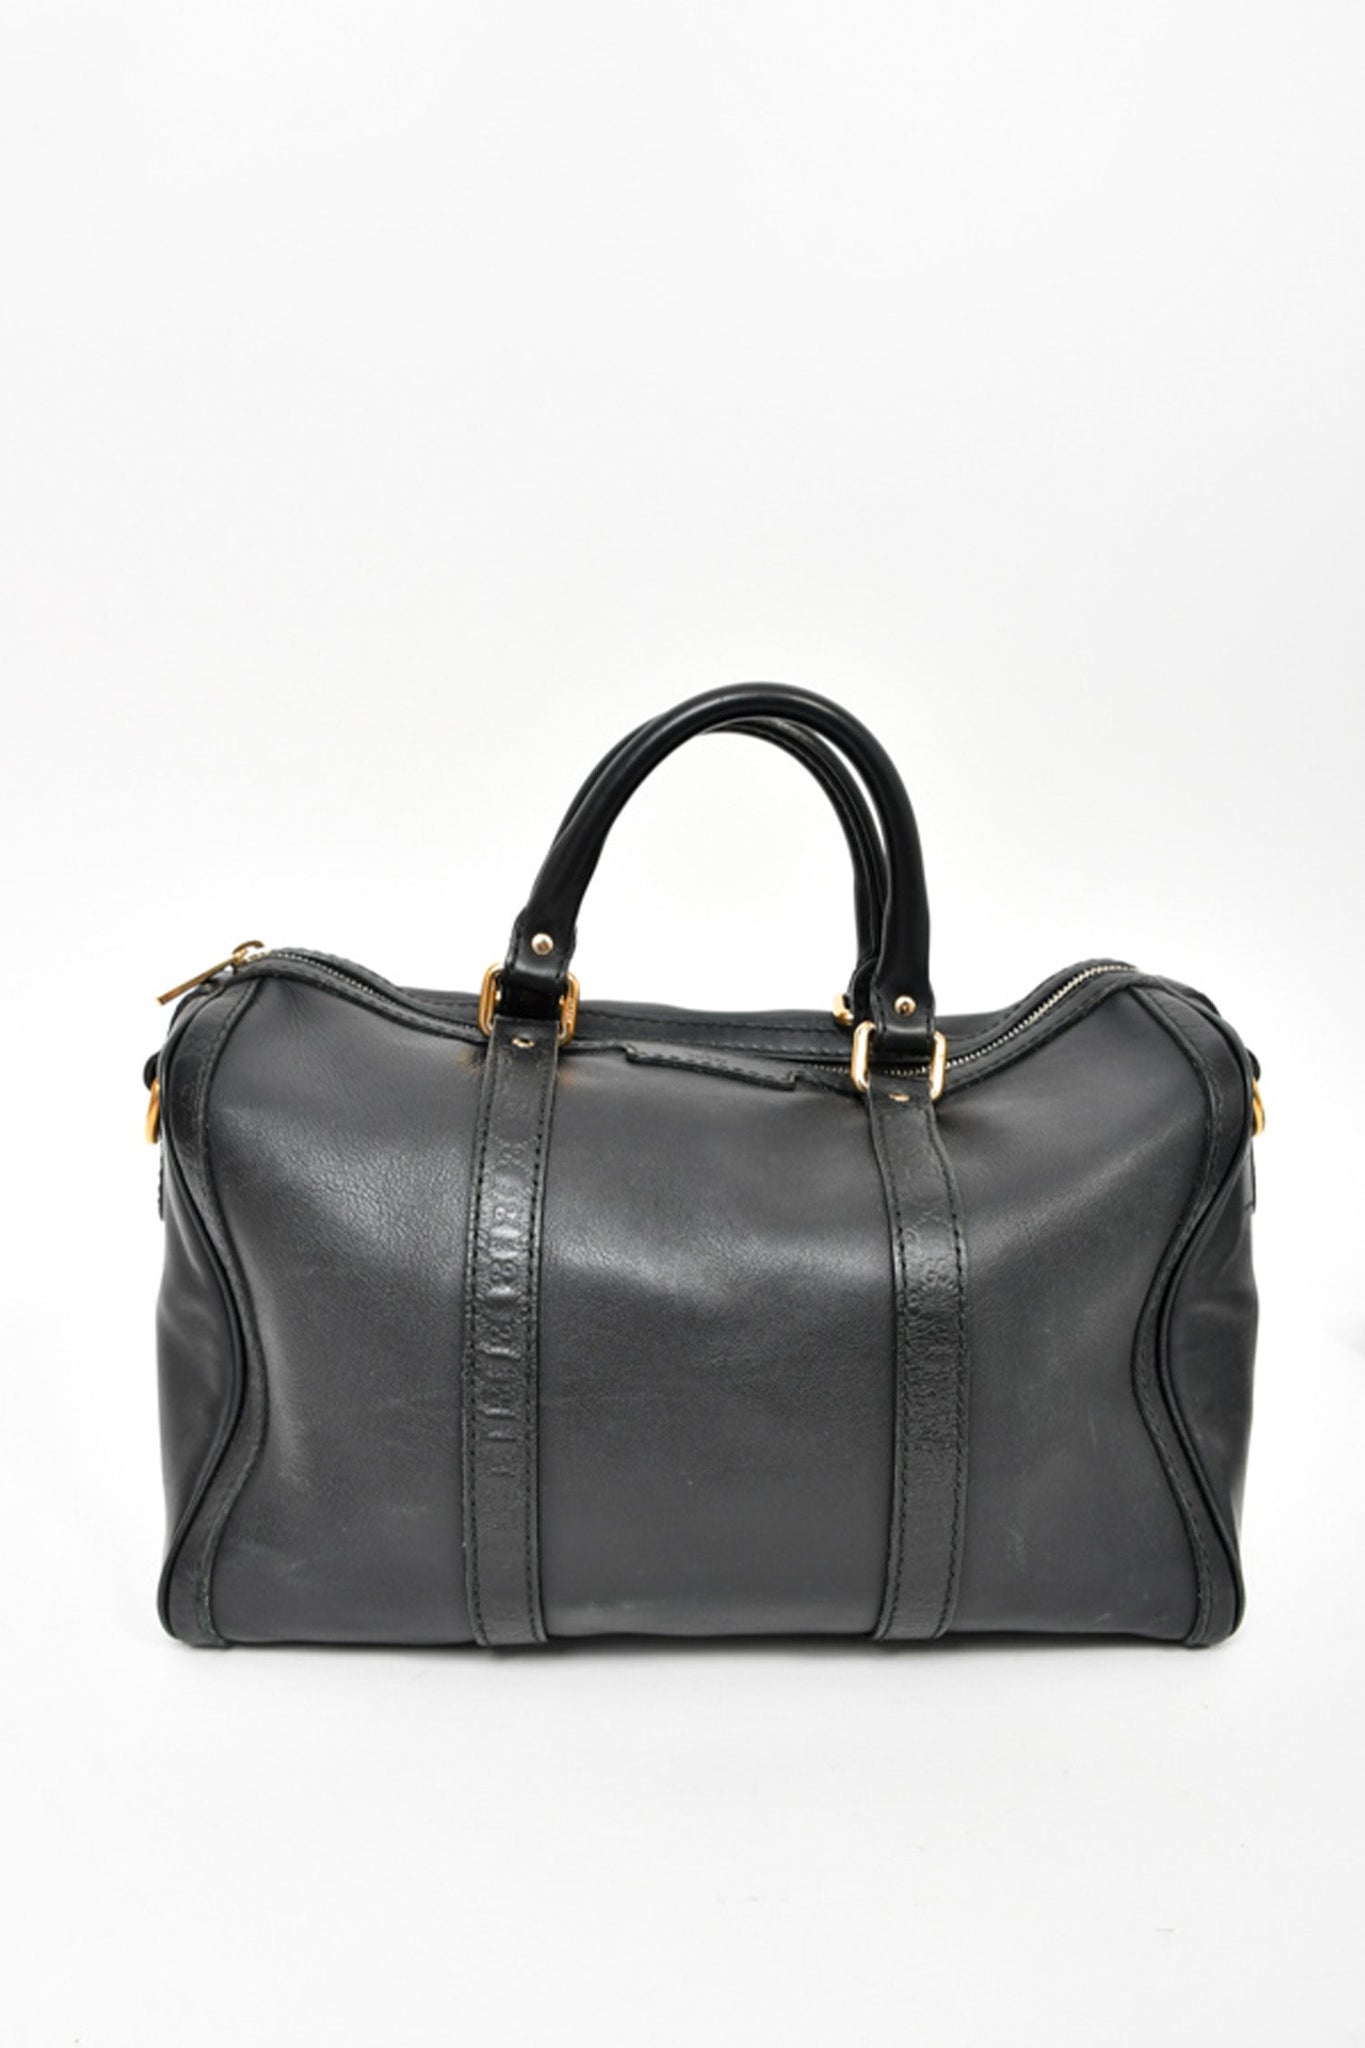 Gucci Black Leather Medium Microguccissima Joy Boston Bag w/ Strap